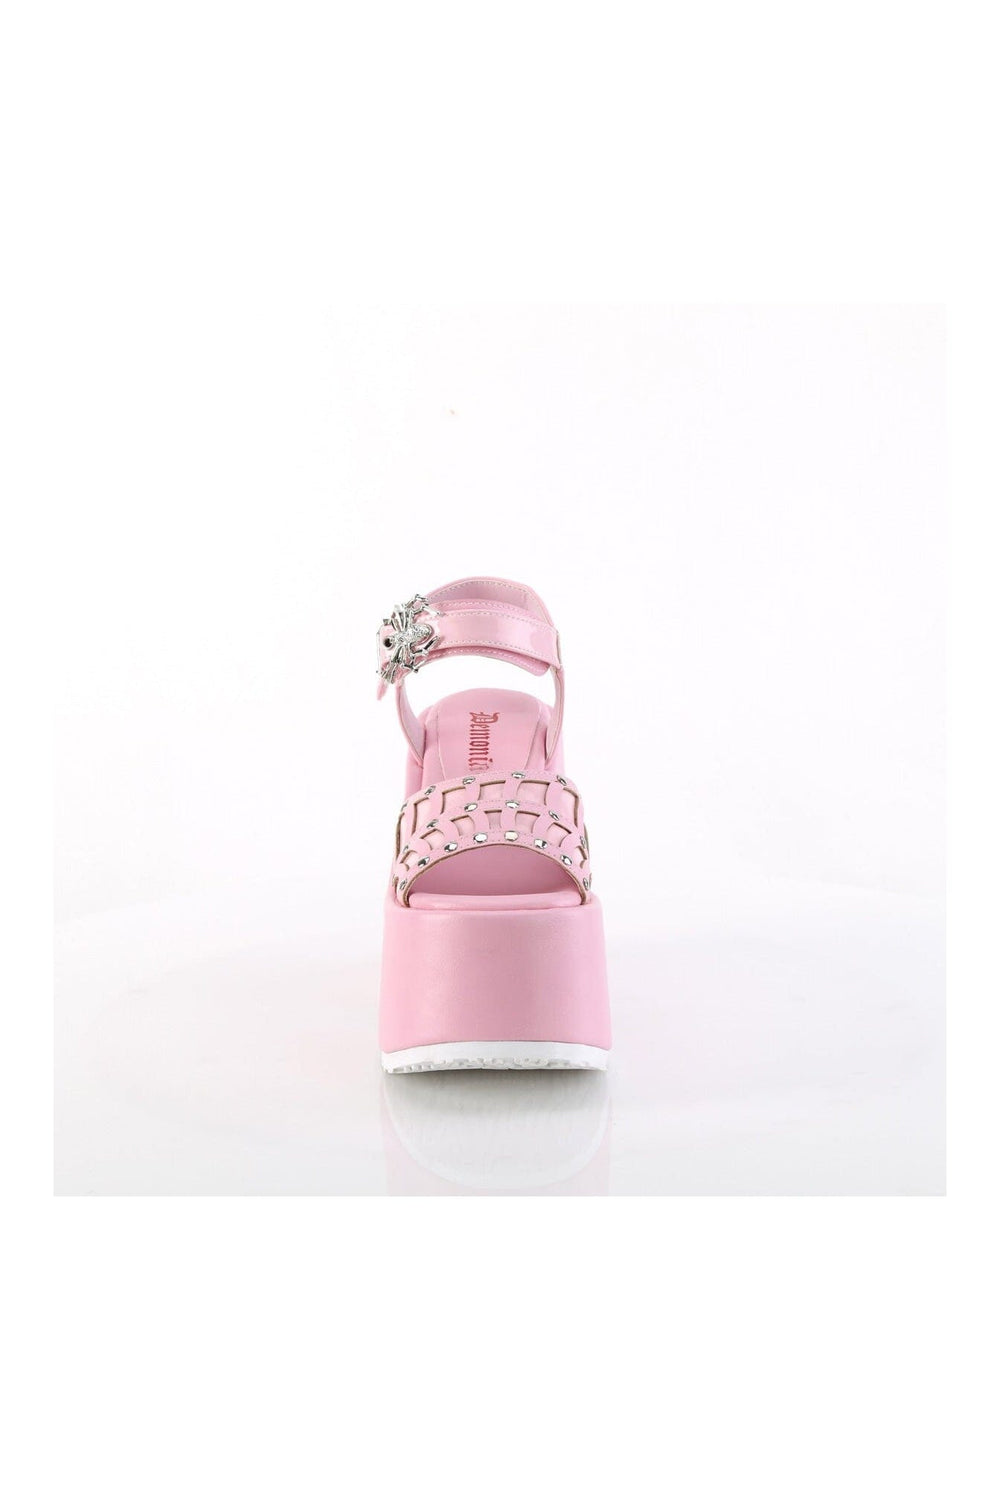 CAMEL-17 Pink Vegan Leather Sandal-Sandals-Demonia-SEXYSHOES.COM